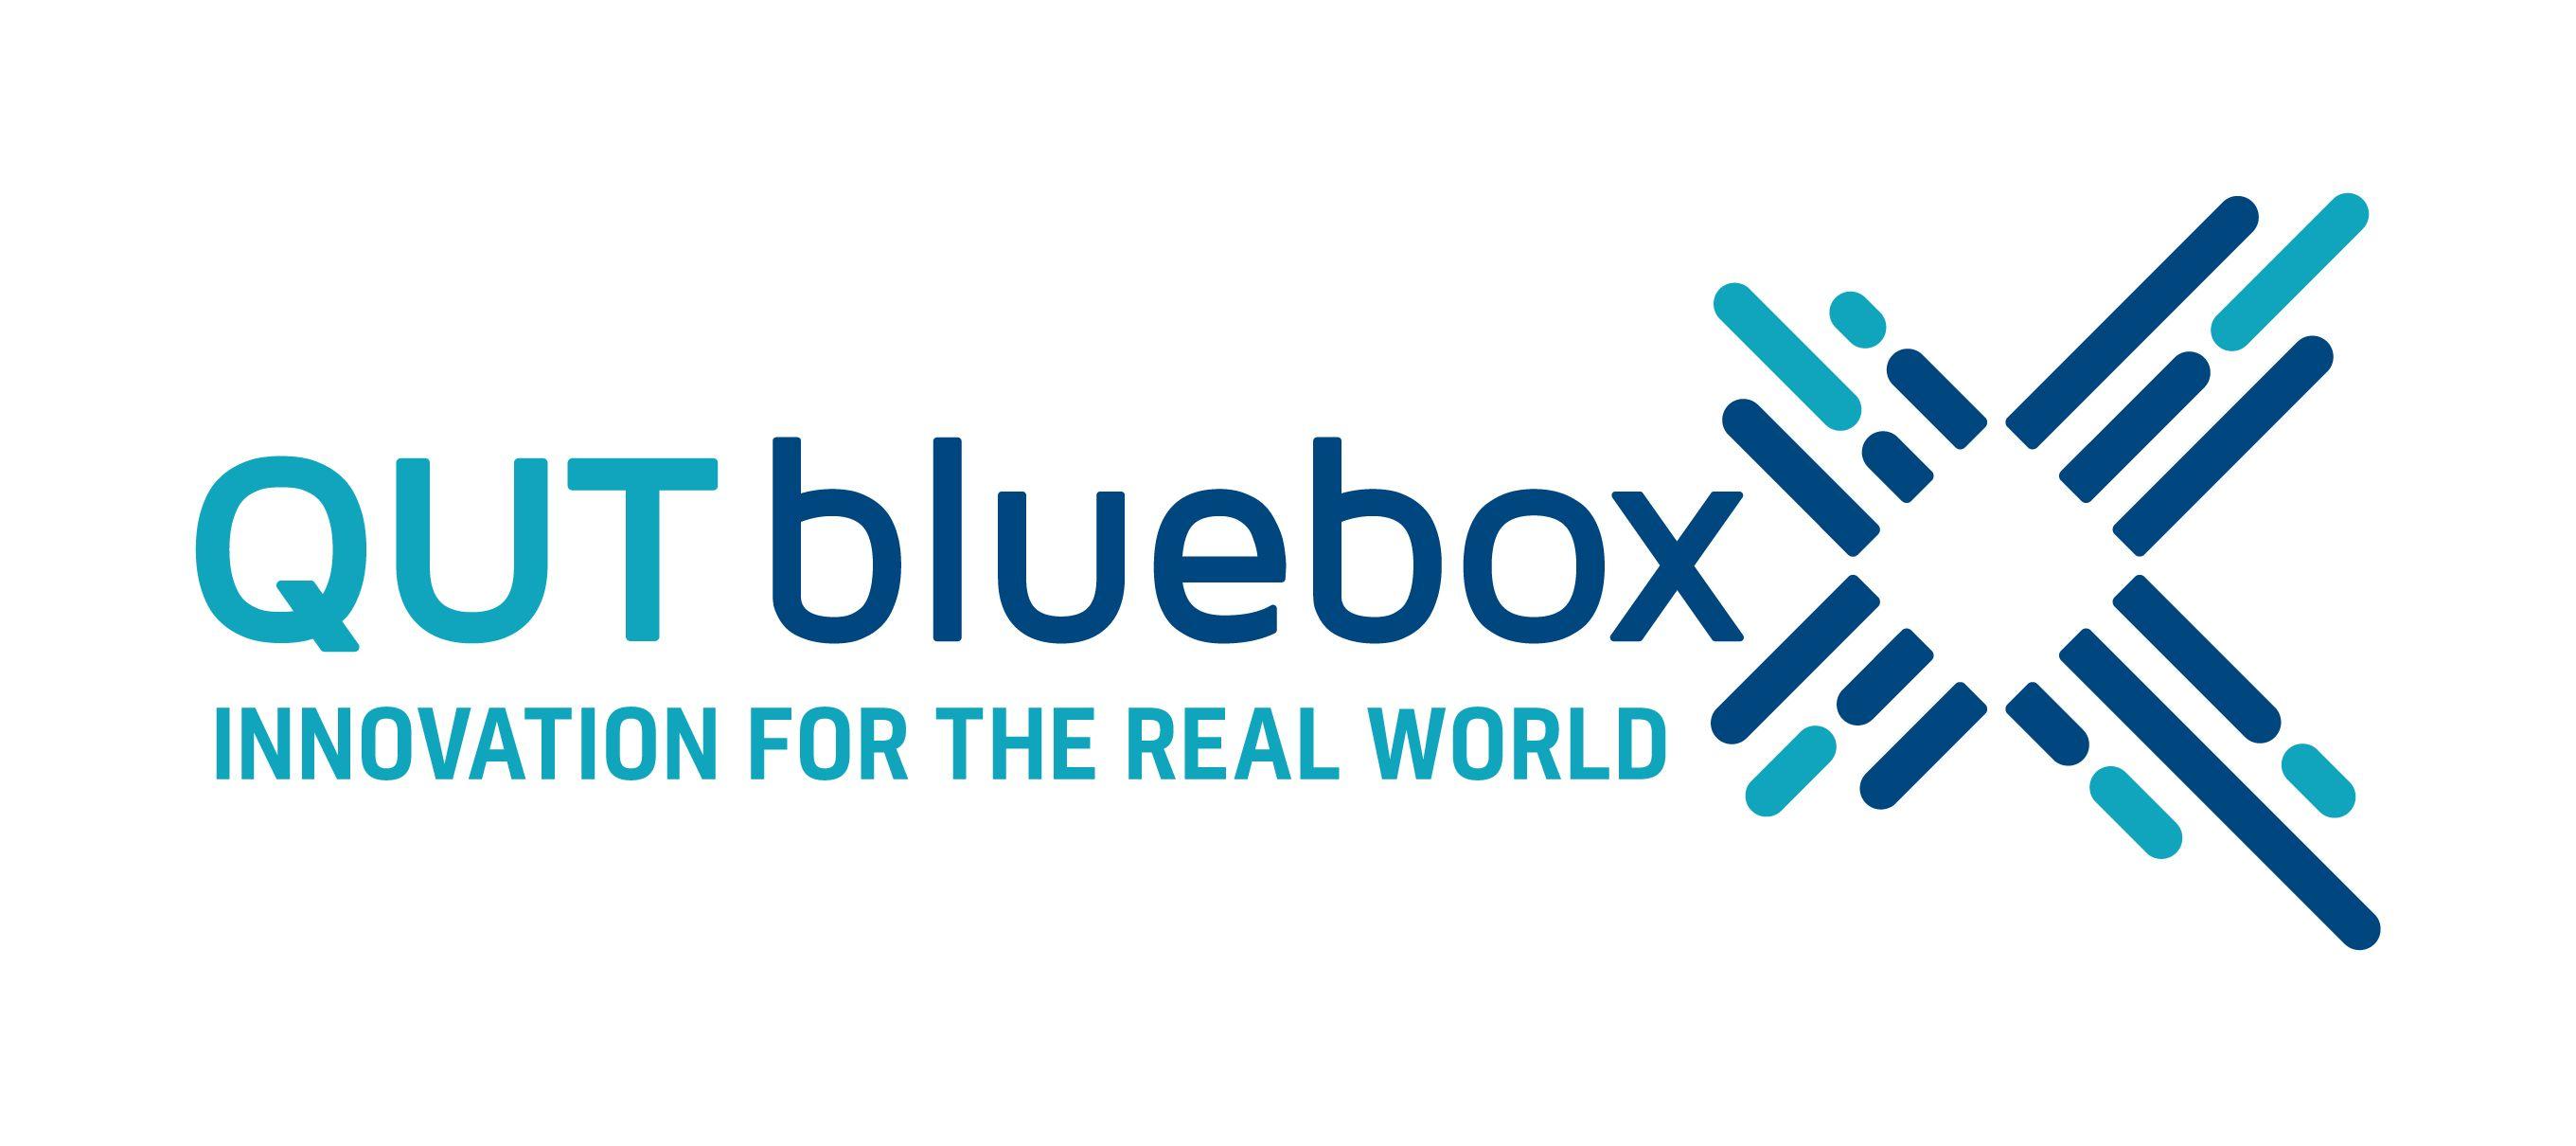 People with Blue Box Logo - Branding - QUT bluebox